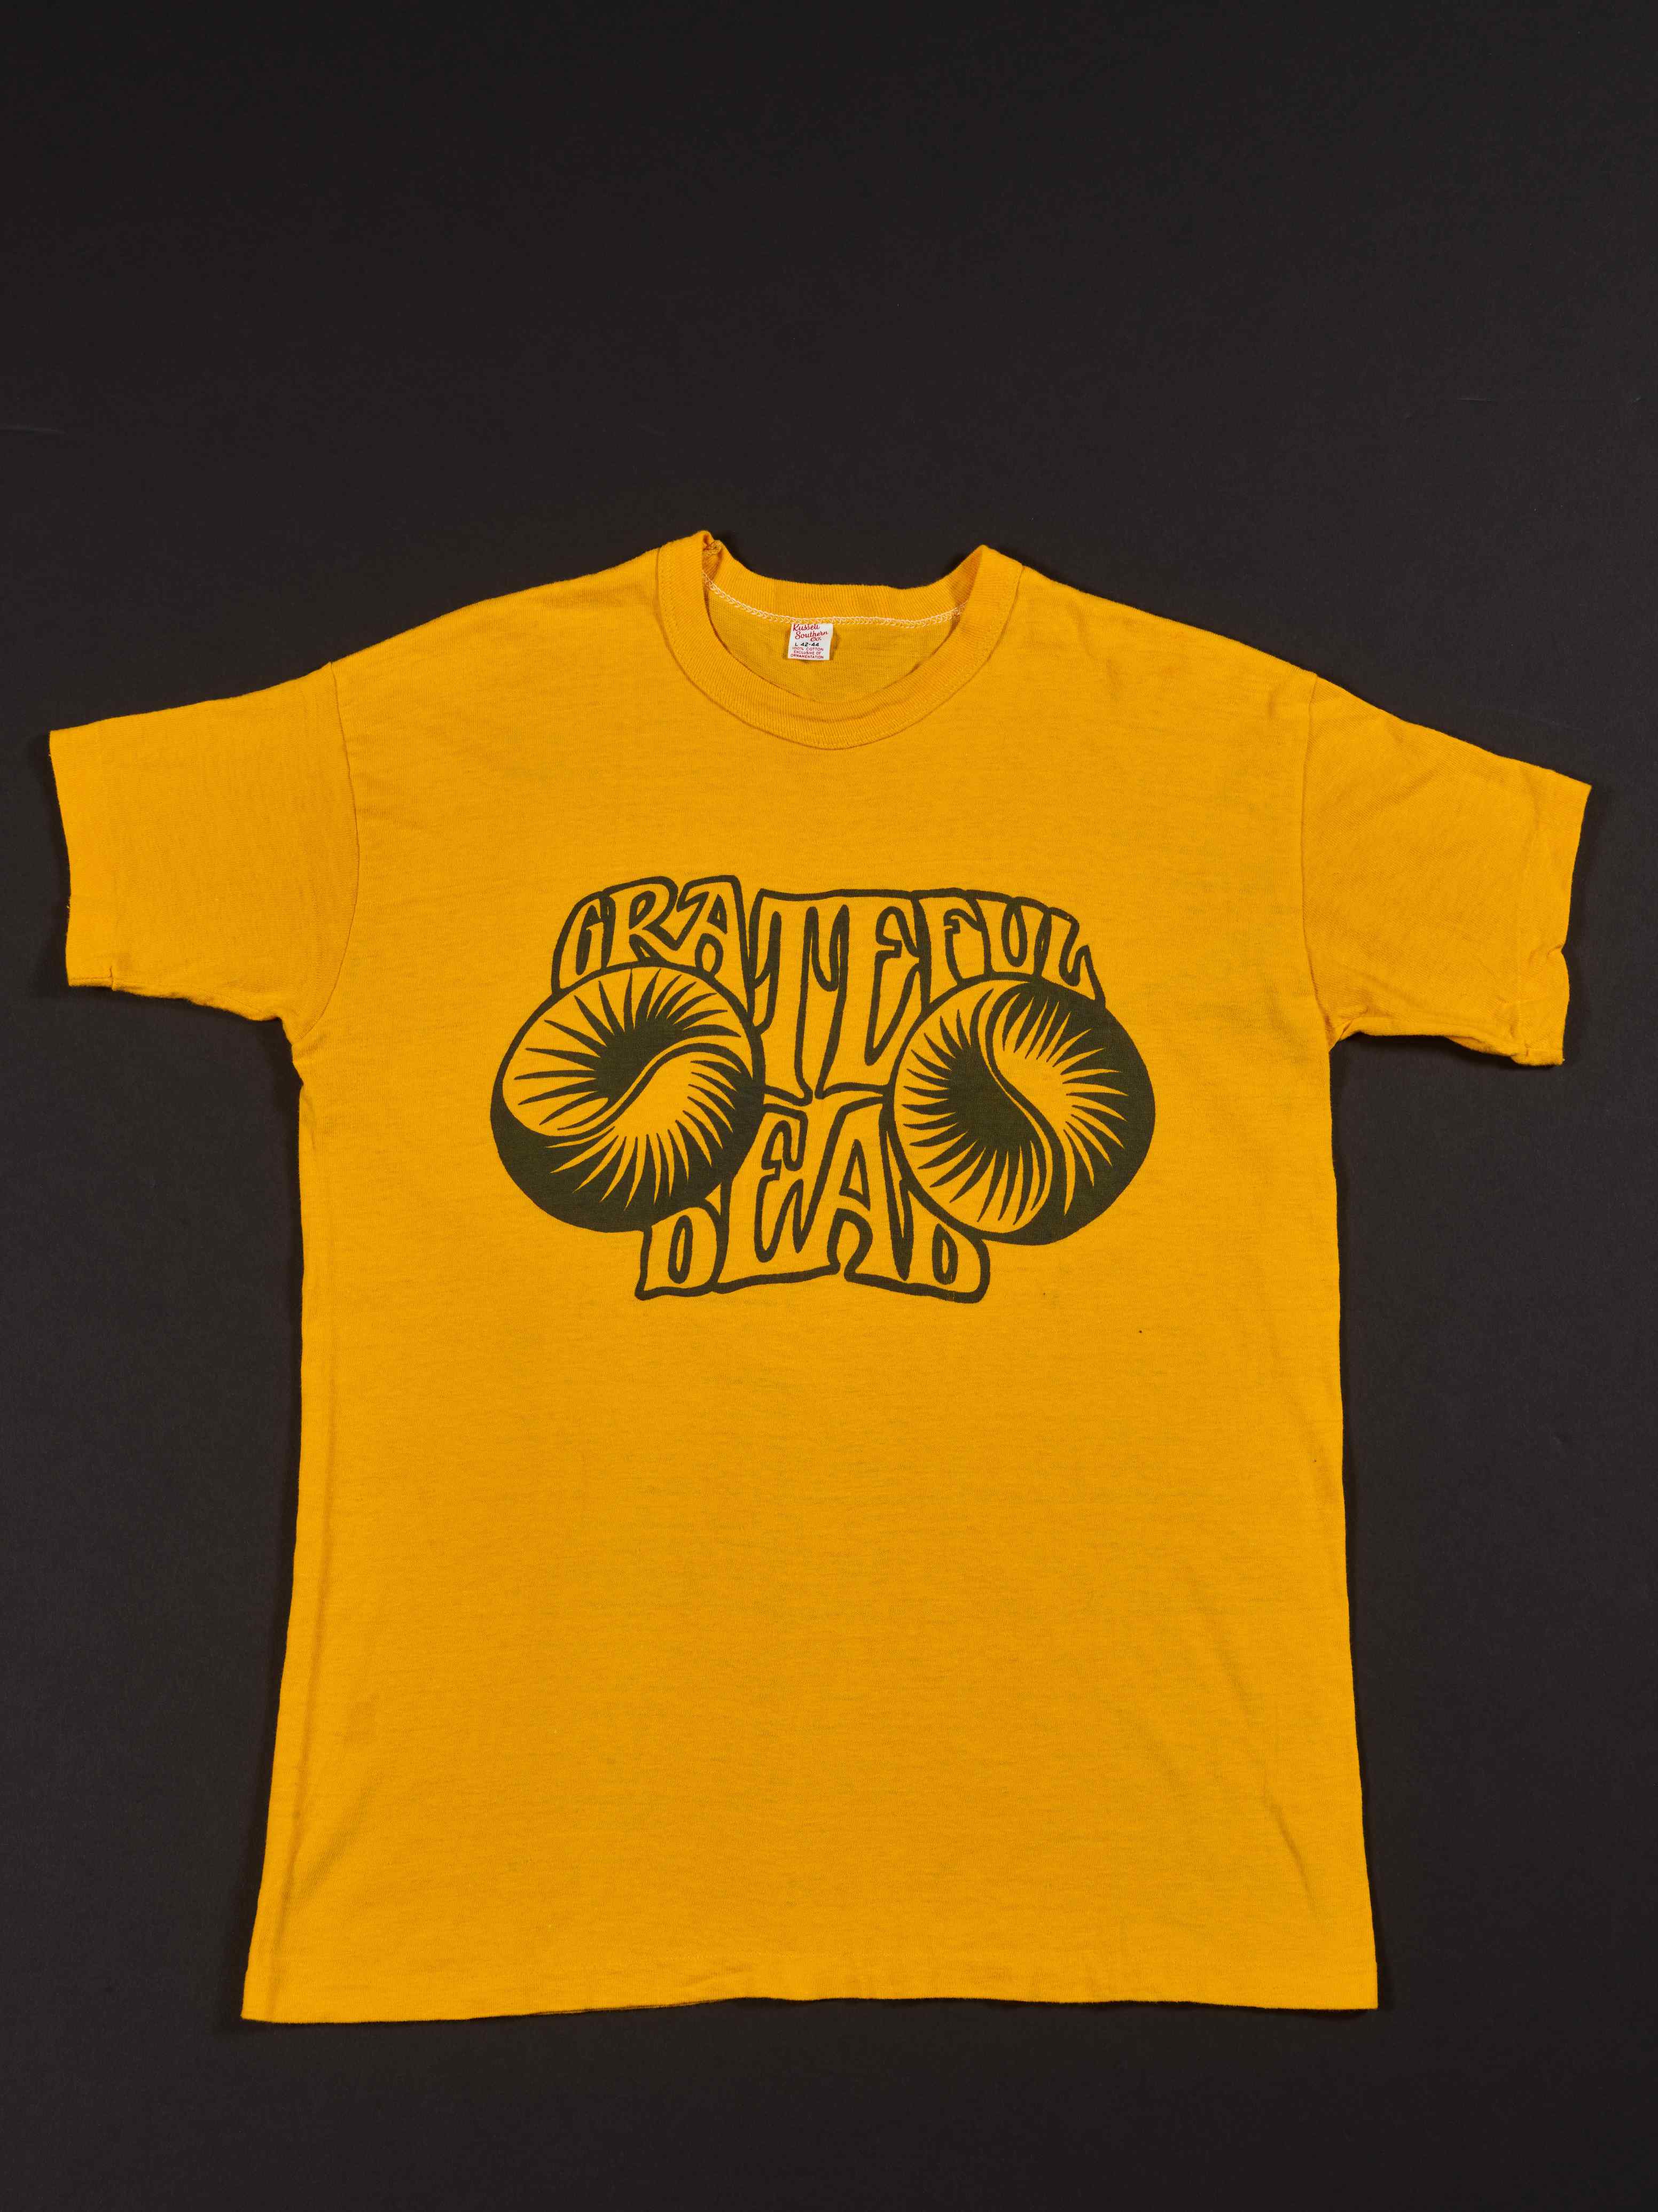 Grateful Dead official t-shirt from 1967